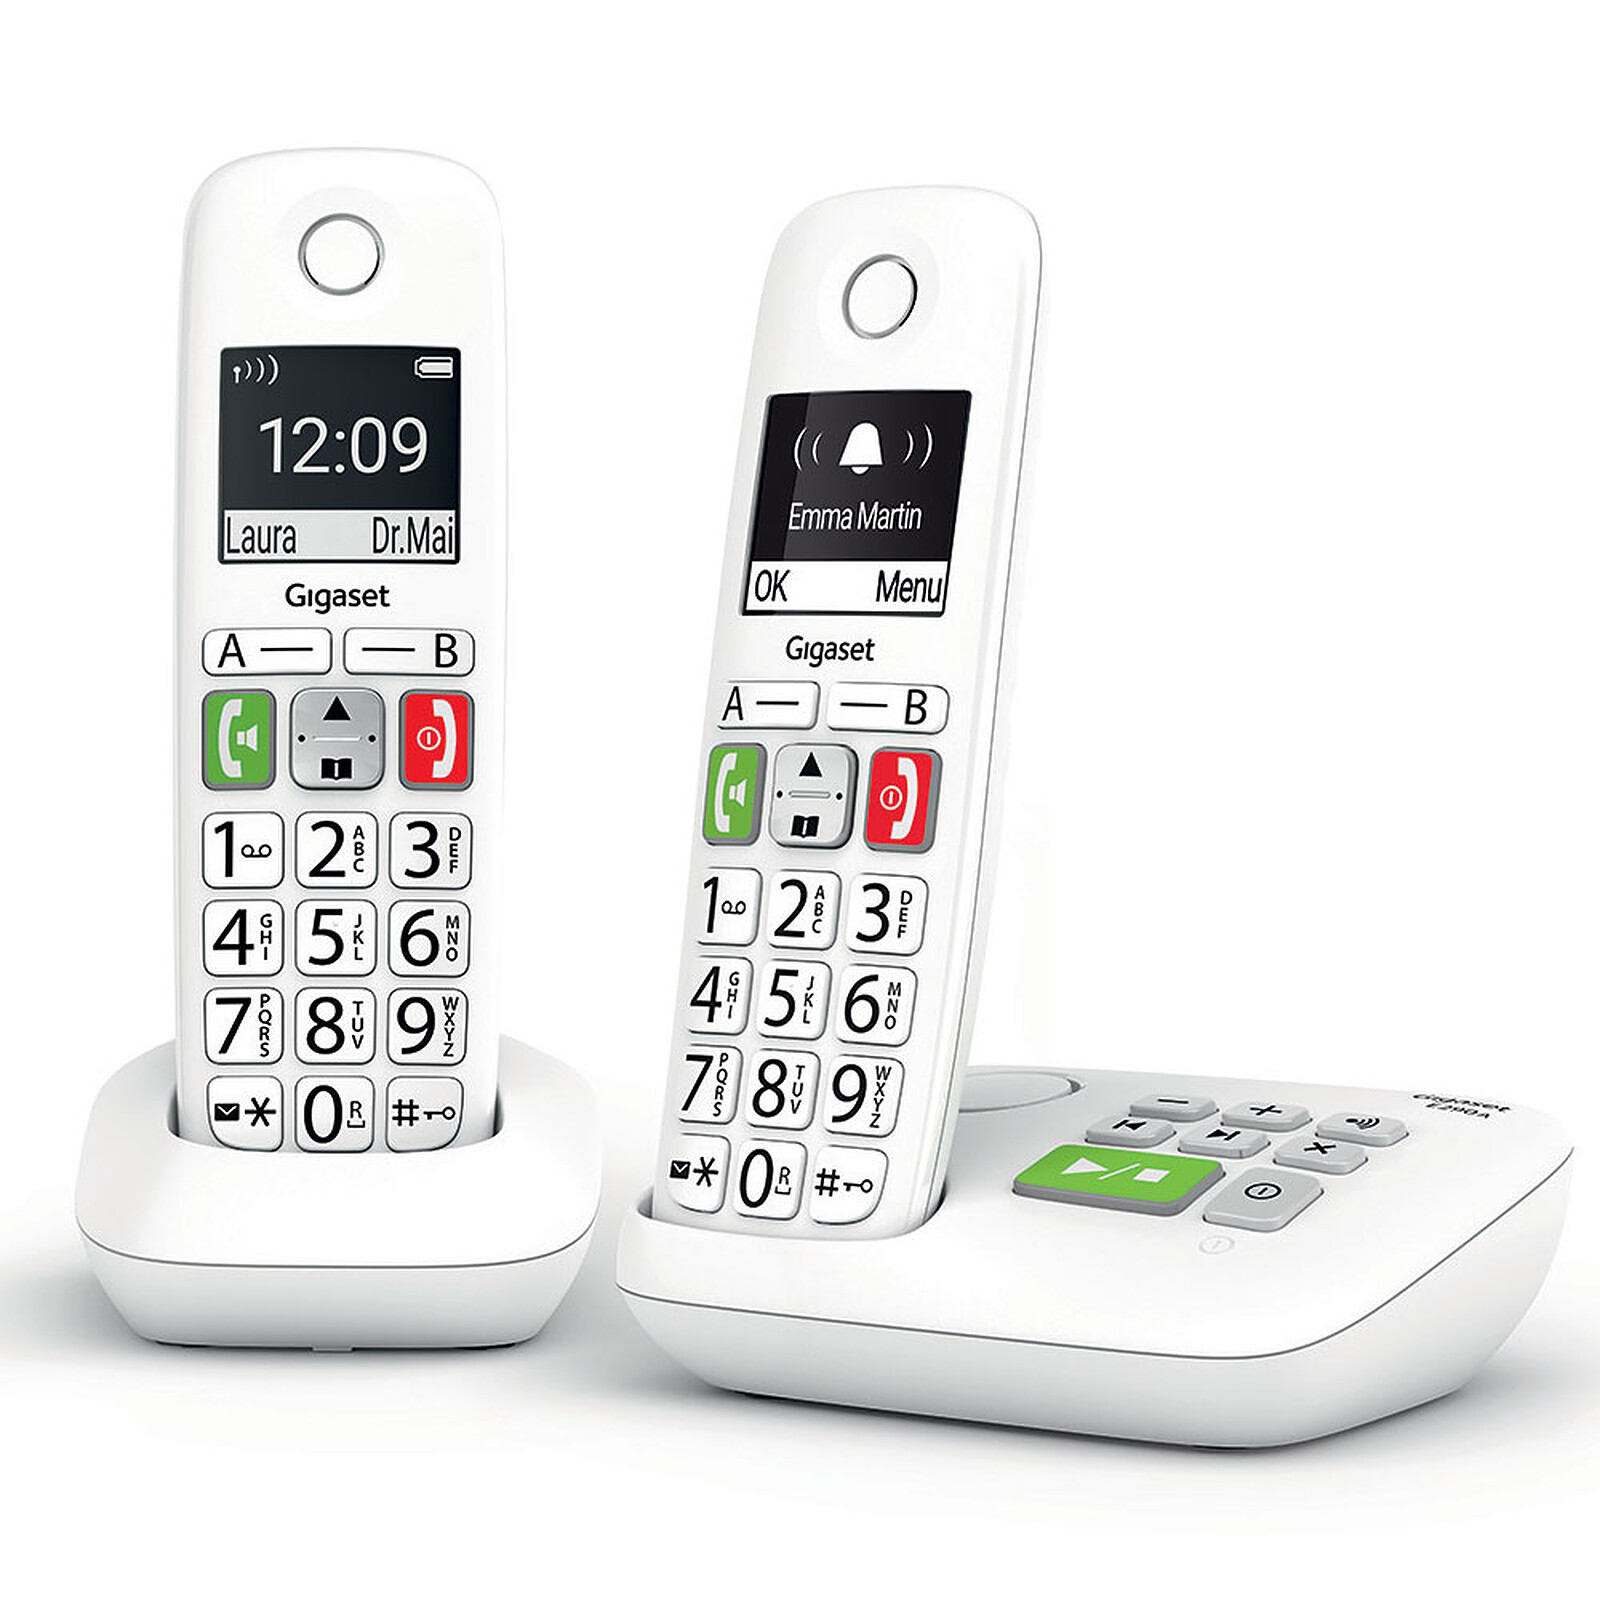 Alcatel XL585 Duo Blanco - Teléfono inalámbrico - LDLC